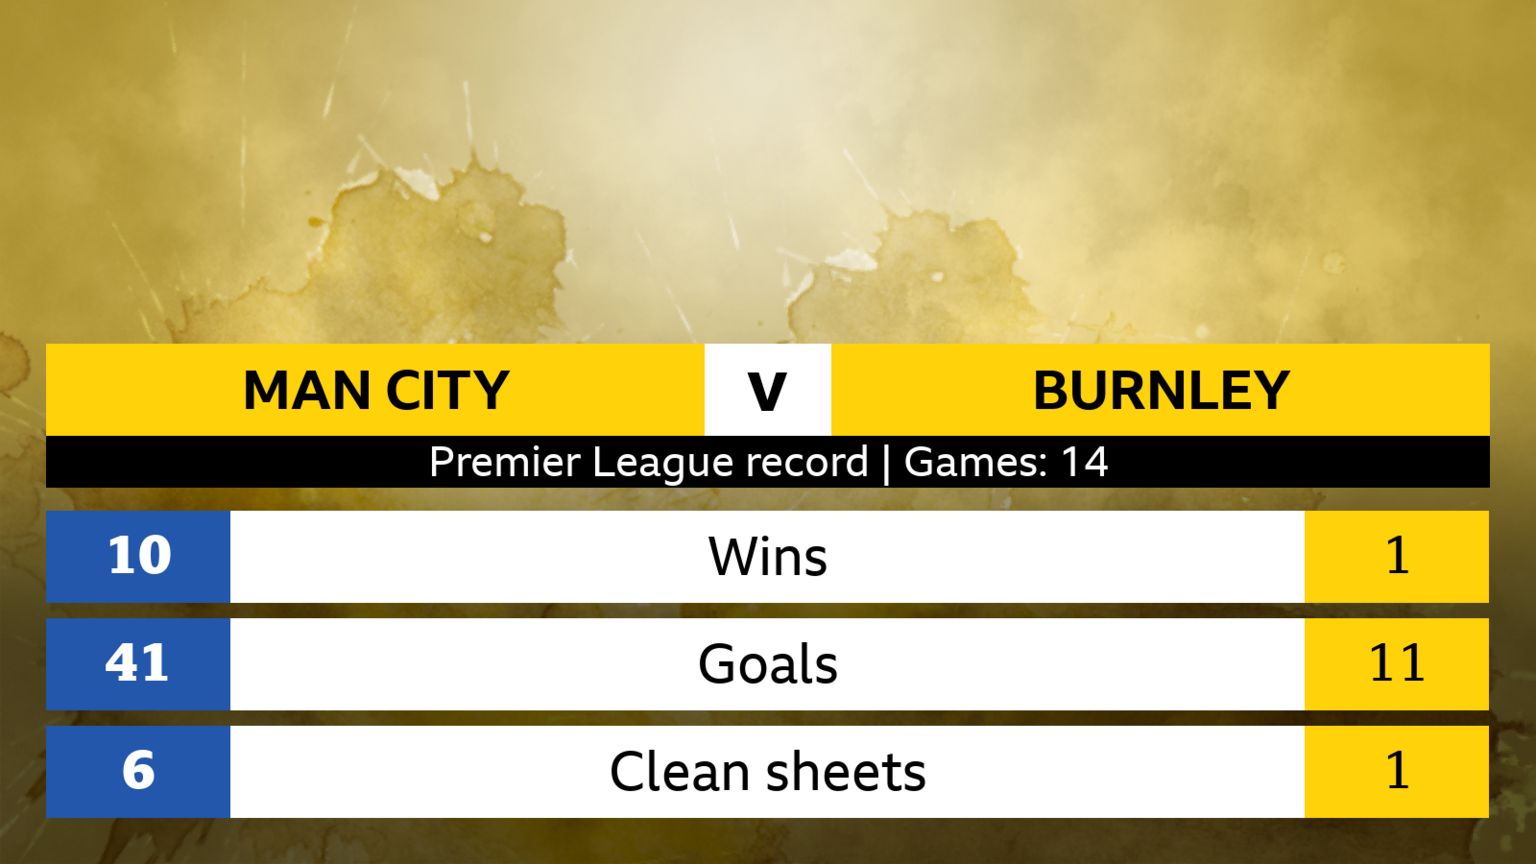 Premier league record, 14 games. Manchester City: 10 wins, 41 goals, 6 clean sheets. Burnley: 1 win, 11 goals, 1 clean sheet